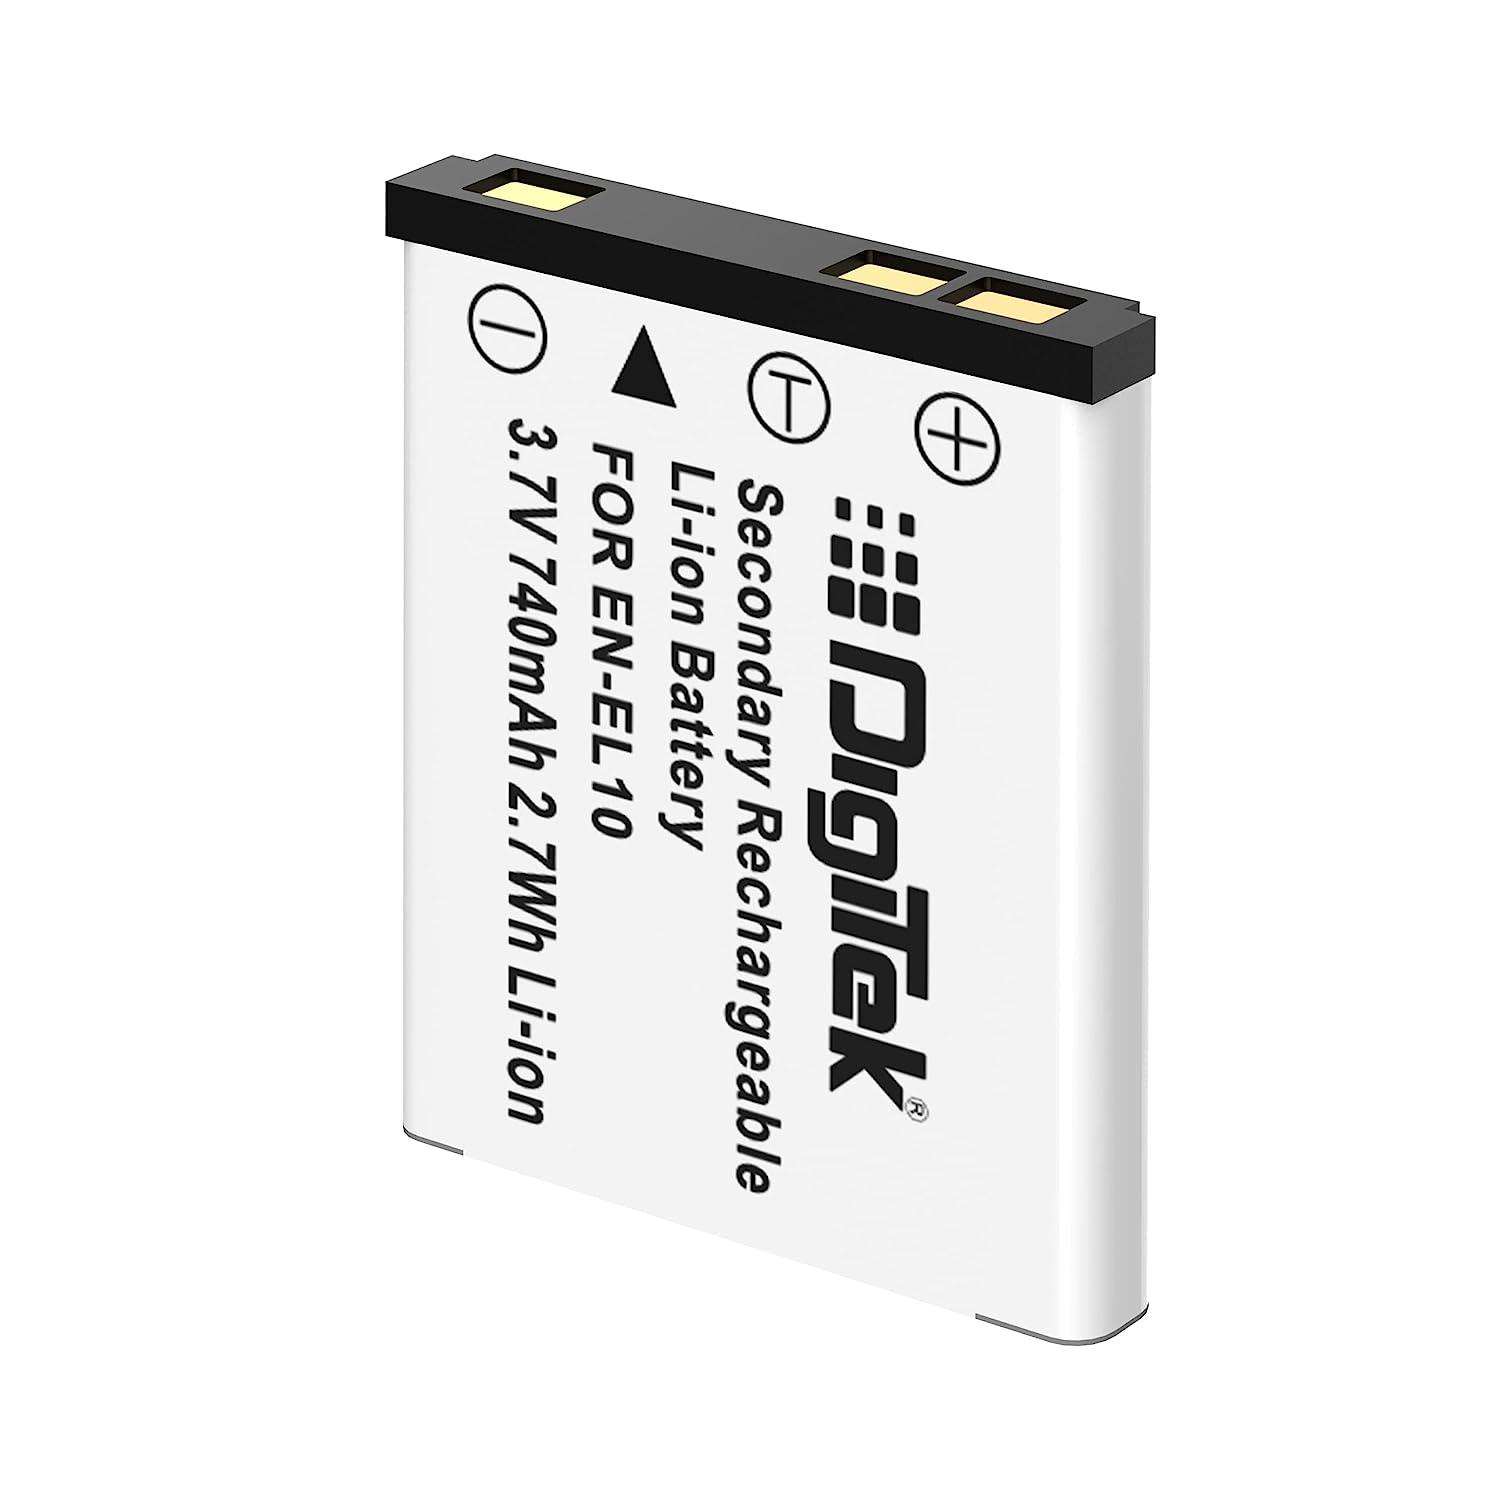 Digitek (EN-EL10) 740mAh Li-ion Rechargeable Battery for Nikon Cameras - Digitek